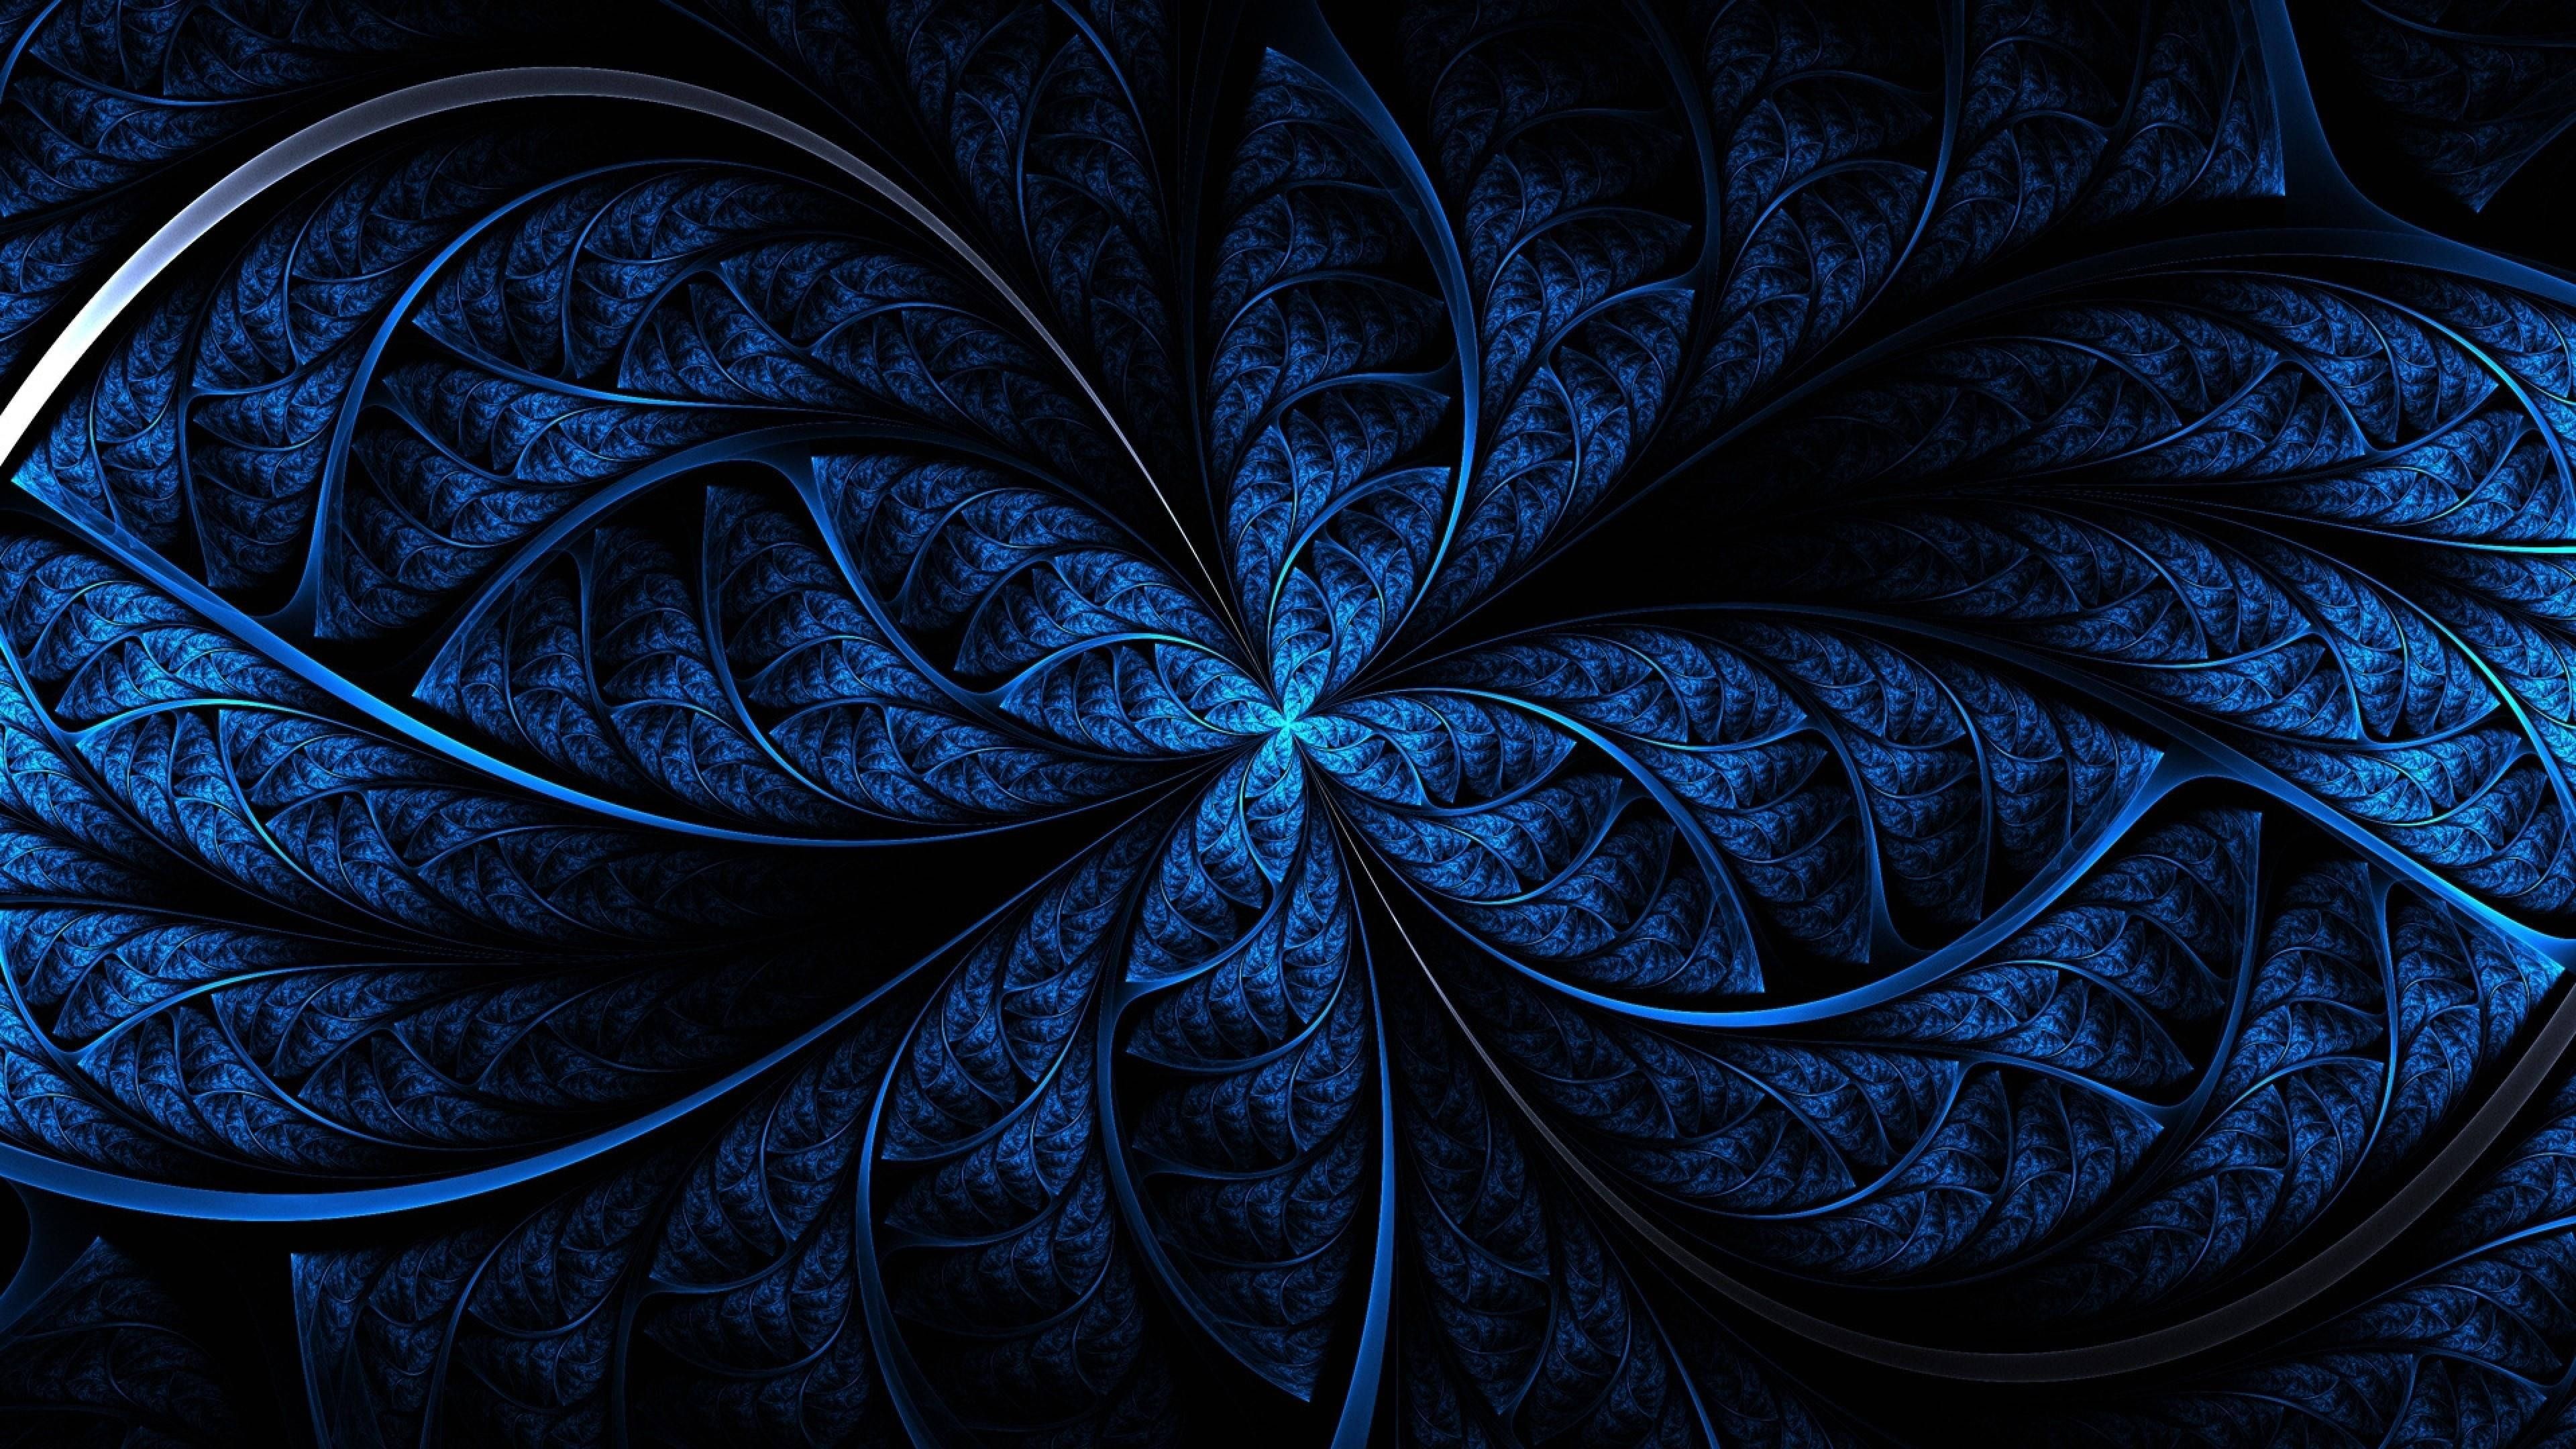 A blue and black patterned background - Dark blue